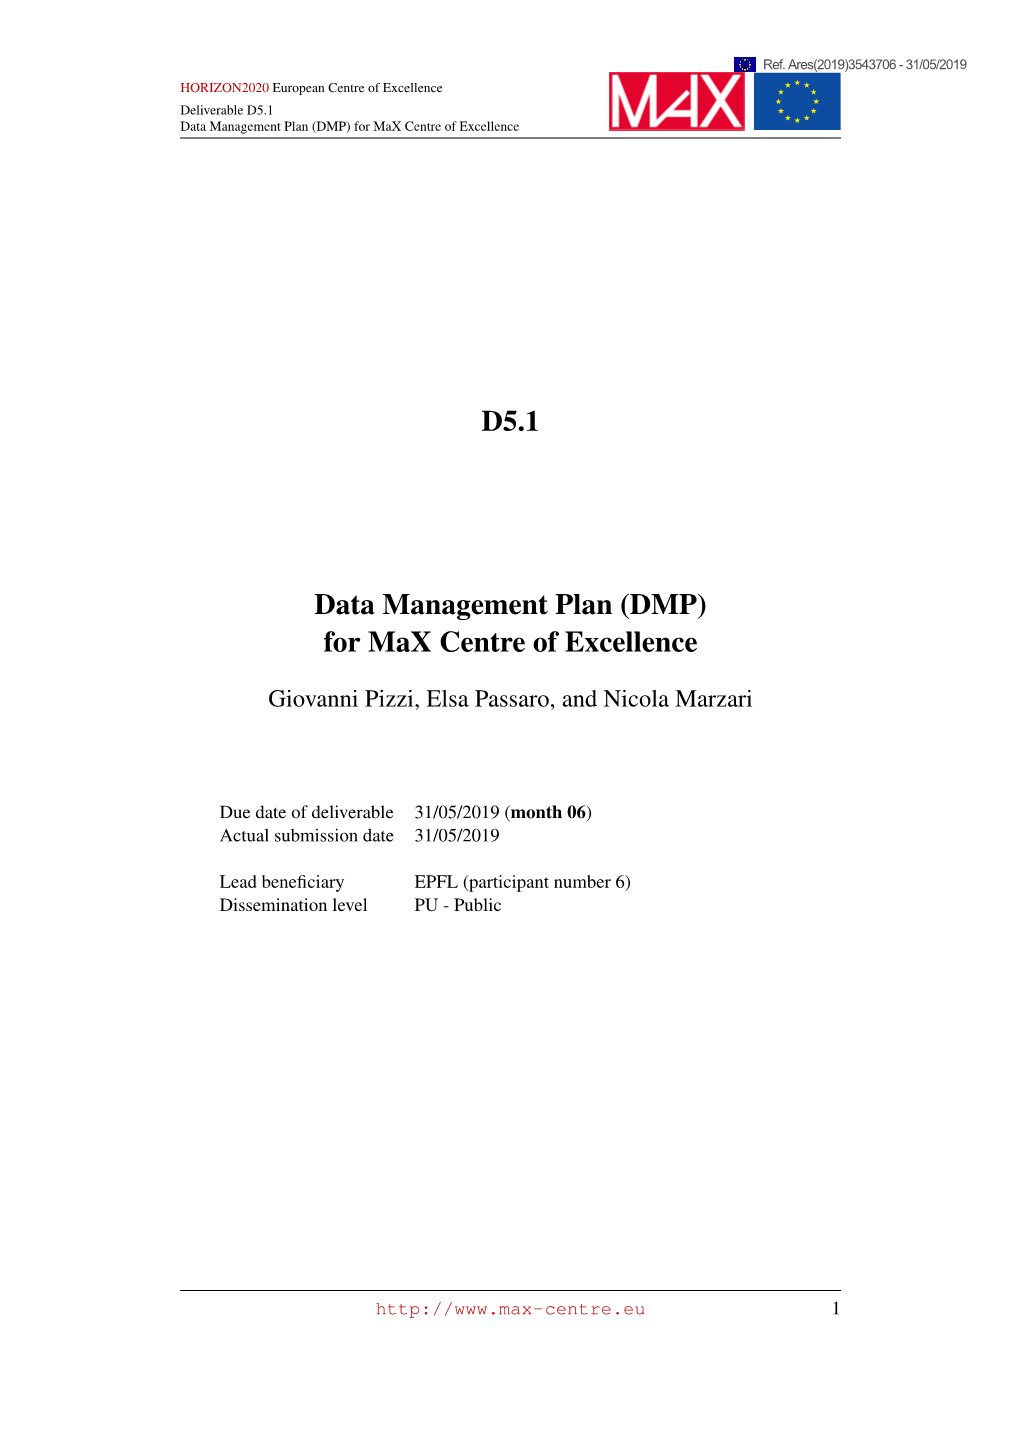 D5.1 Data Management Plan (DMP) for Max Centre of Excellence